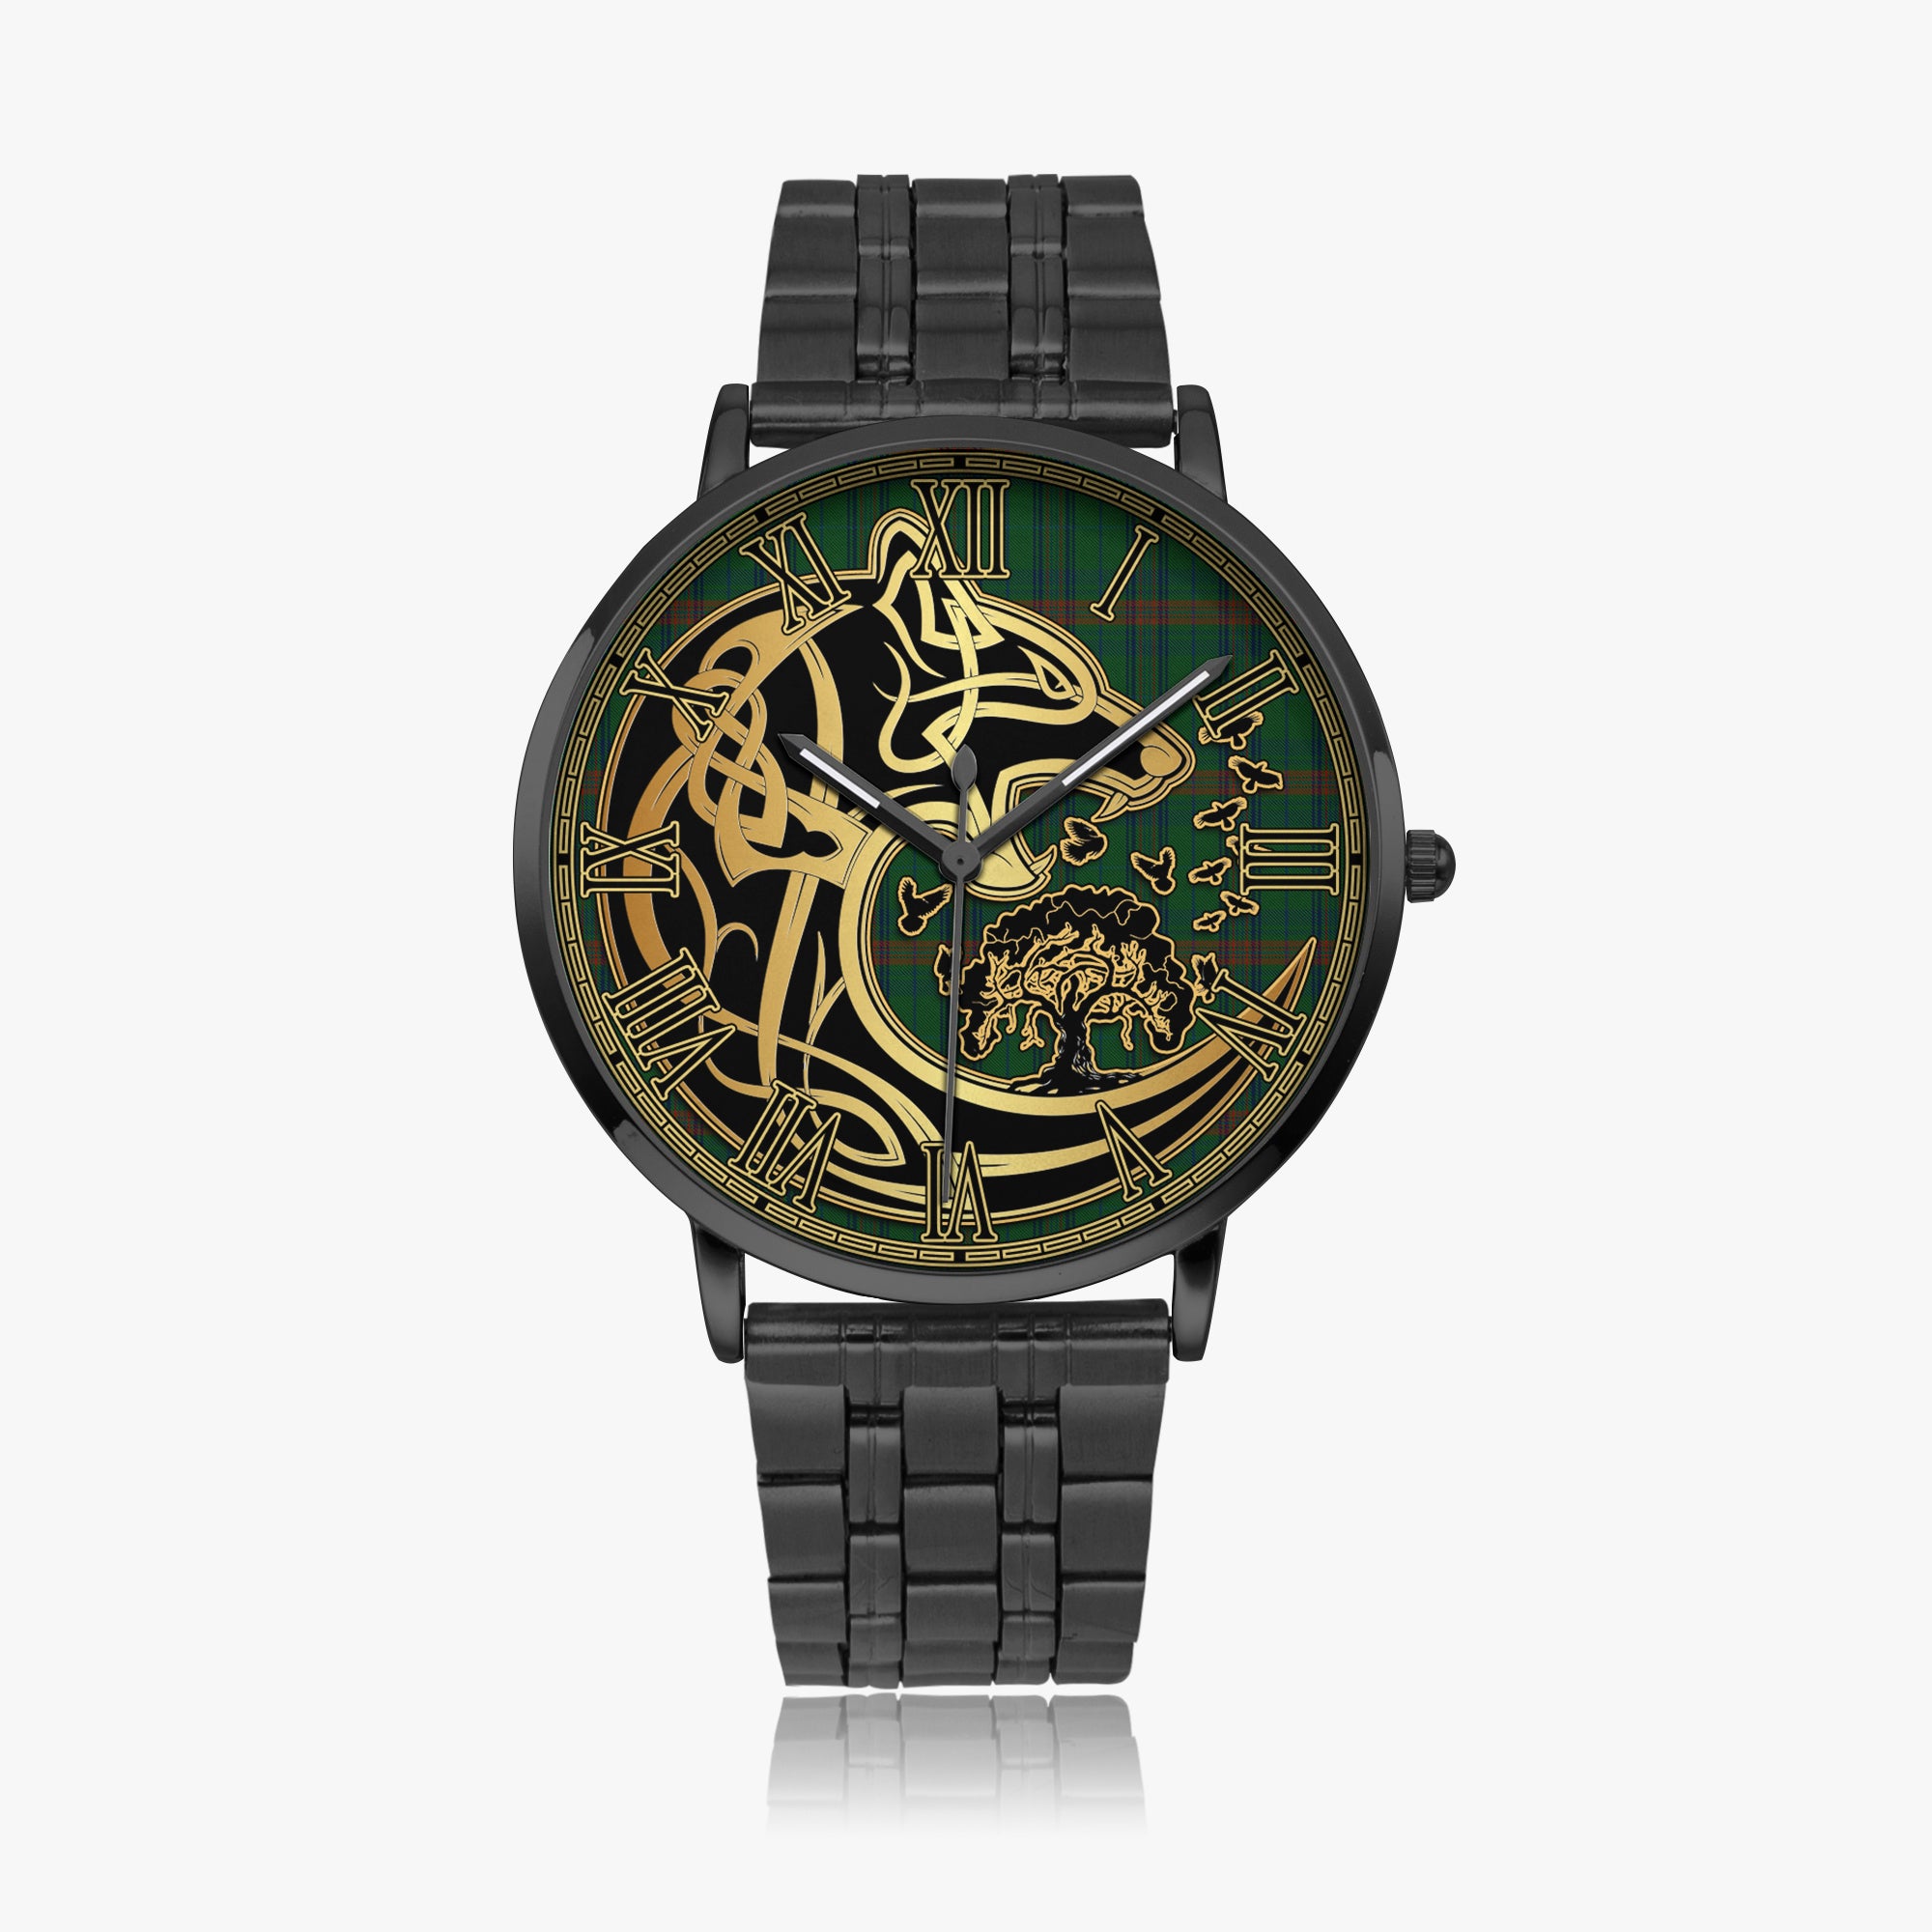 owen-of-wales-tartan-watch-with-stainless-steel-trap-tartan-instafamous-quartz-stainless-steel-watch-golden-celtic-wolf-style